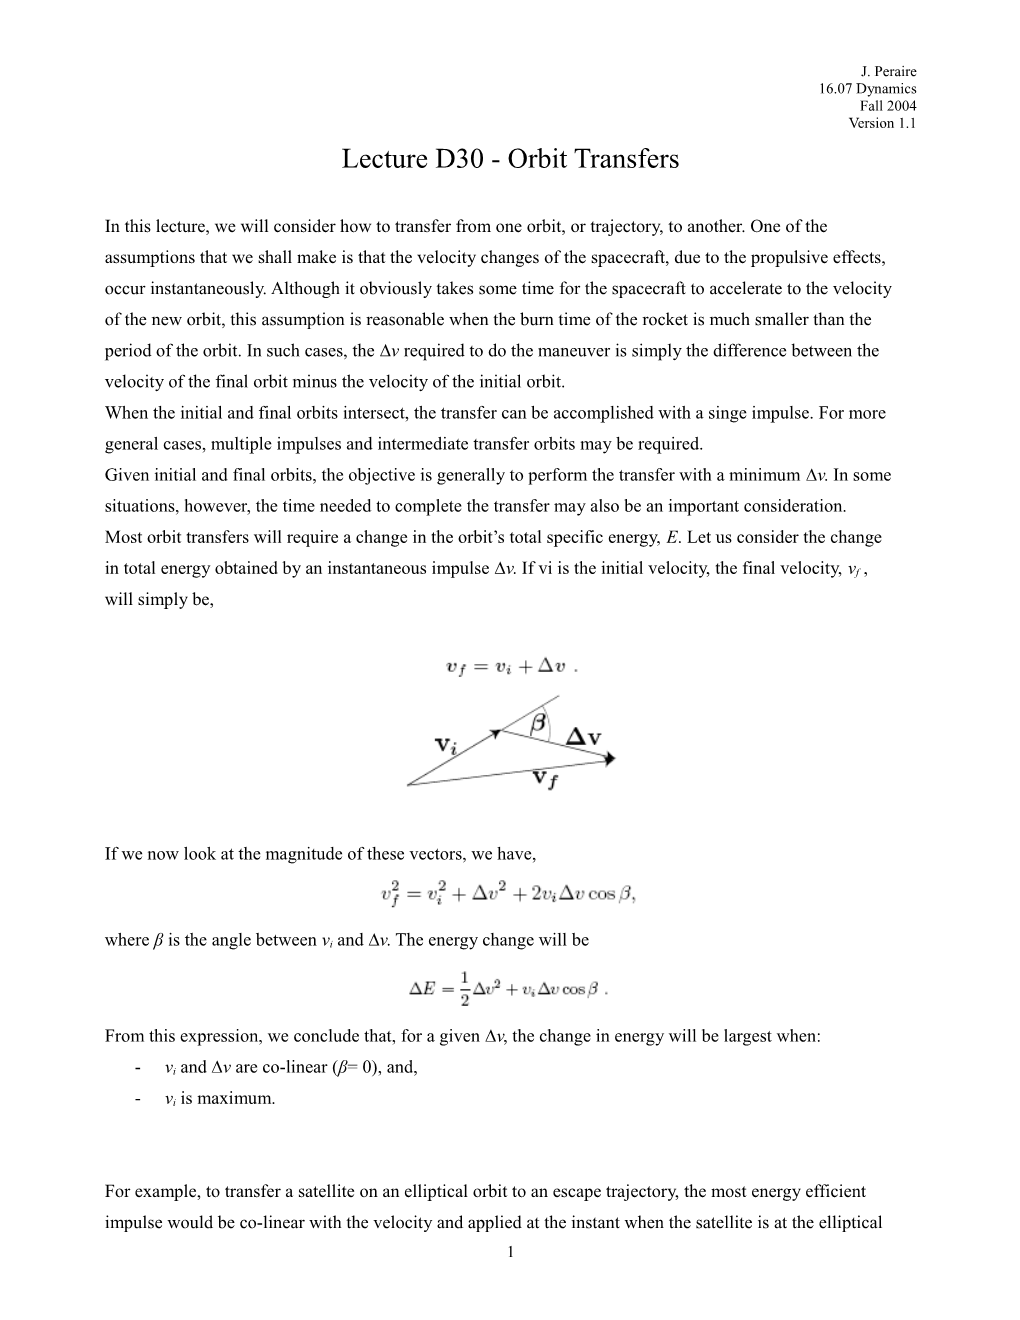 Lecture D30 - Orbit Transfers